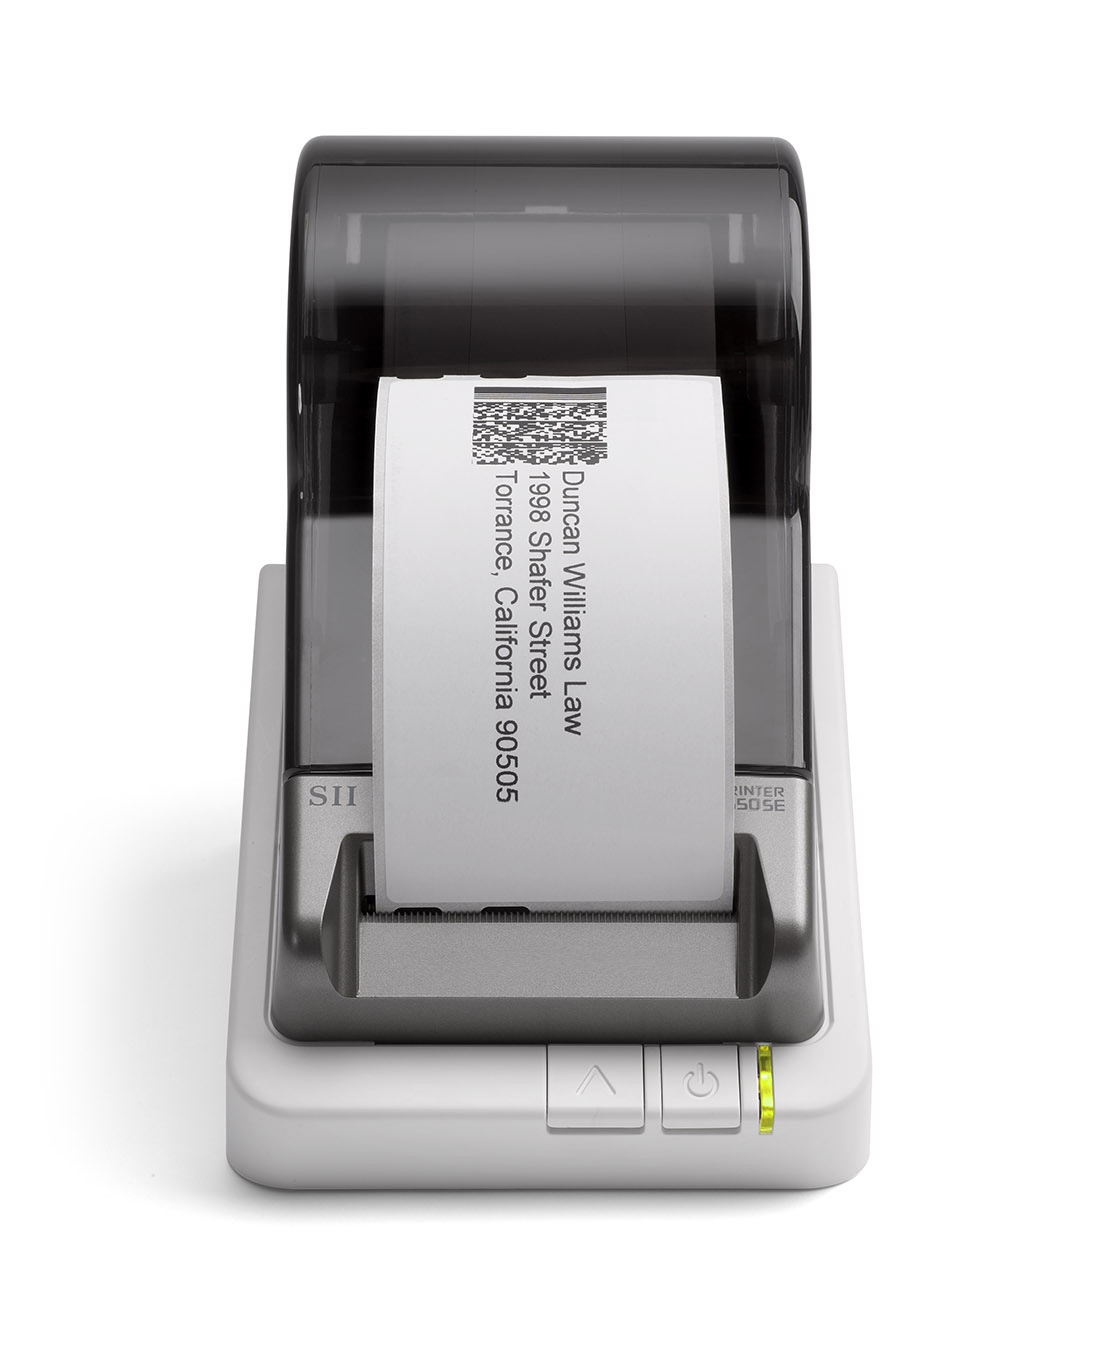 SLP 650/650SE - Smart Label Printers | Seiko Instruments USA